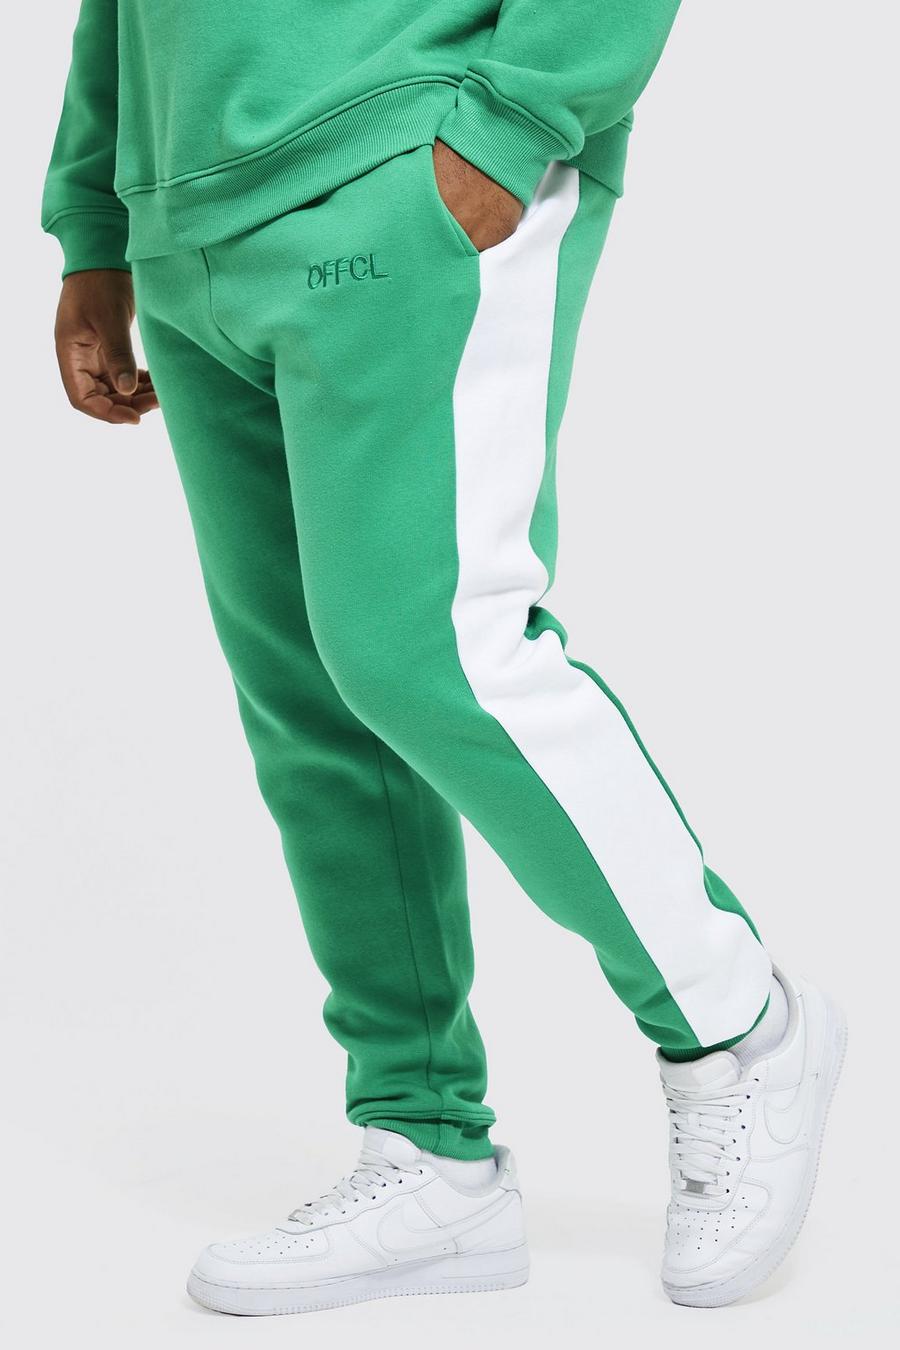 Bright green verde מכנסי ריצה סקיני עם פאנל בצד וכיתוב Offcl, מידות גדולות